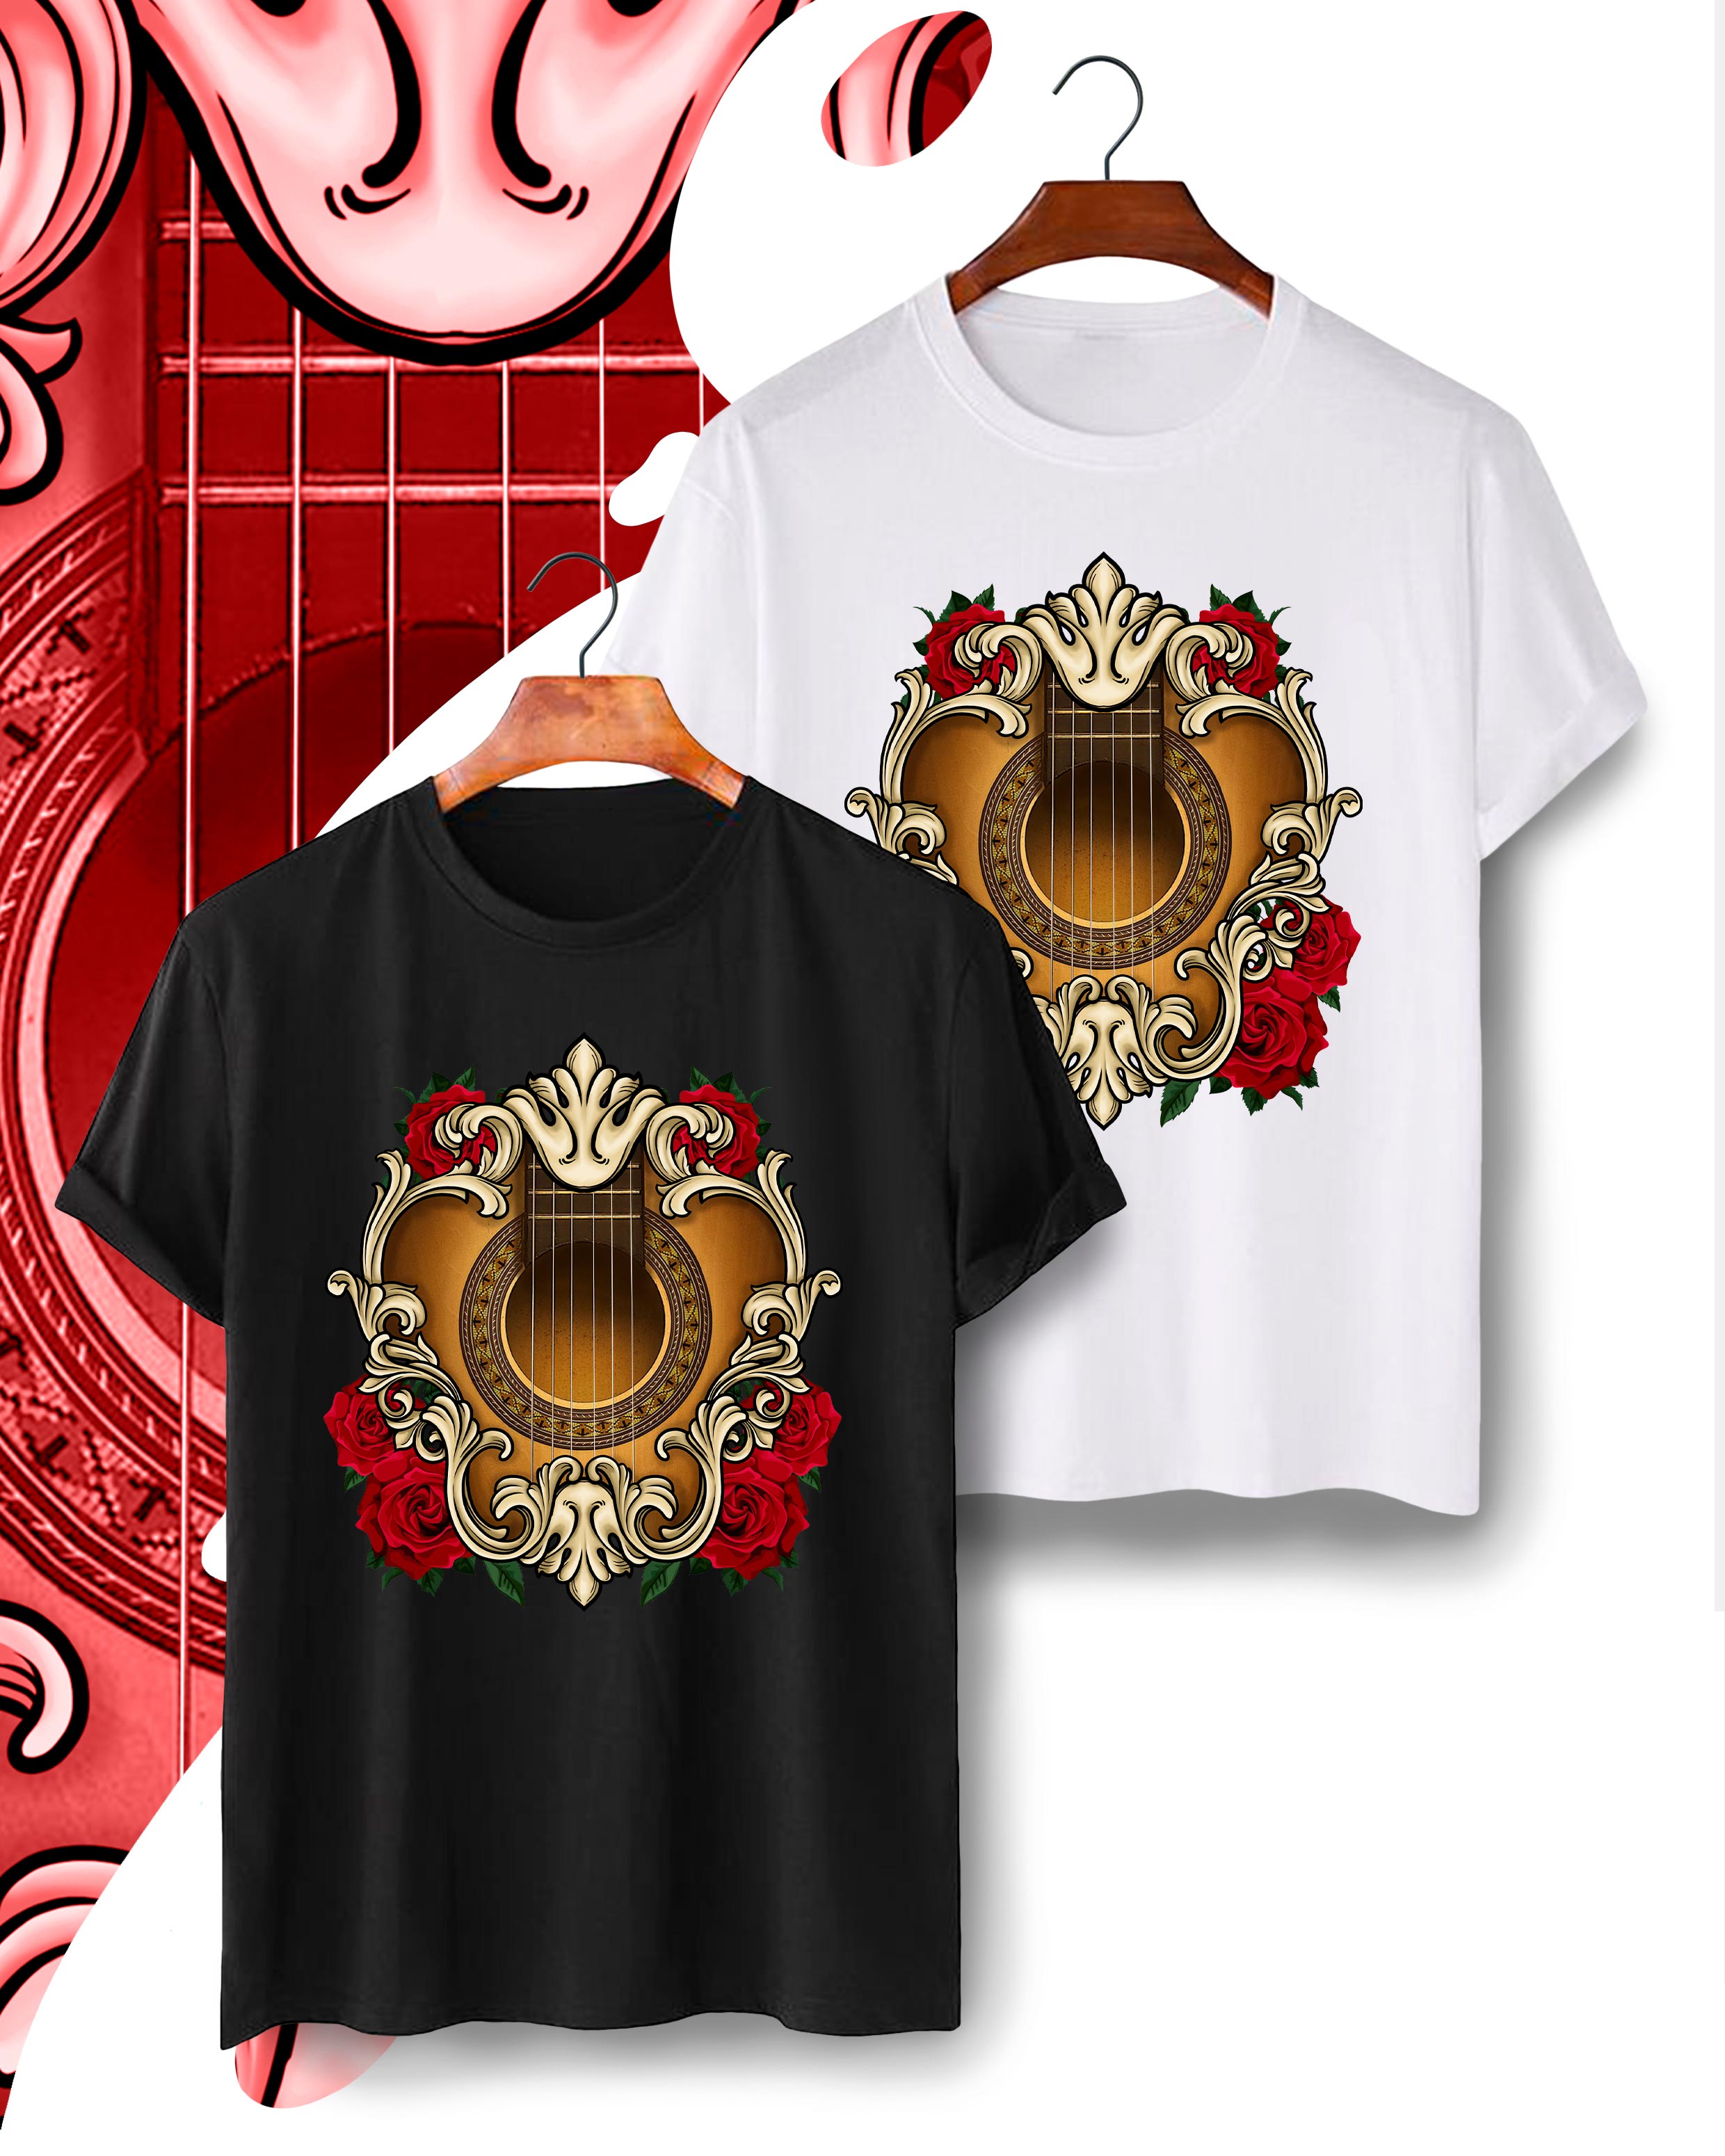 Camiseta Flamenco con guitarra flamenca